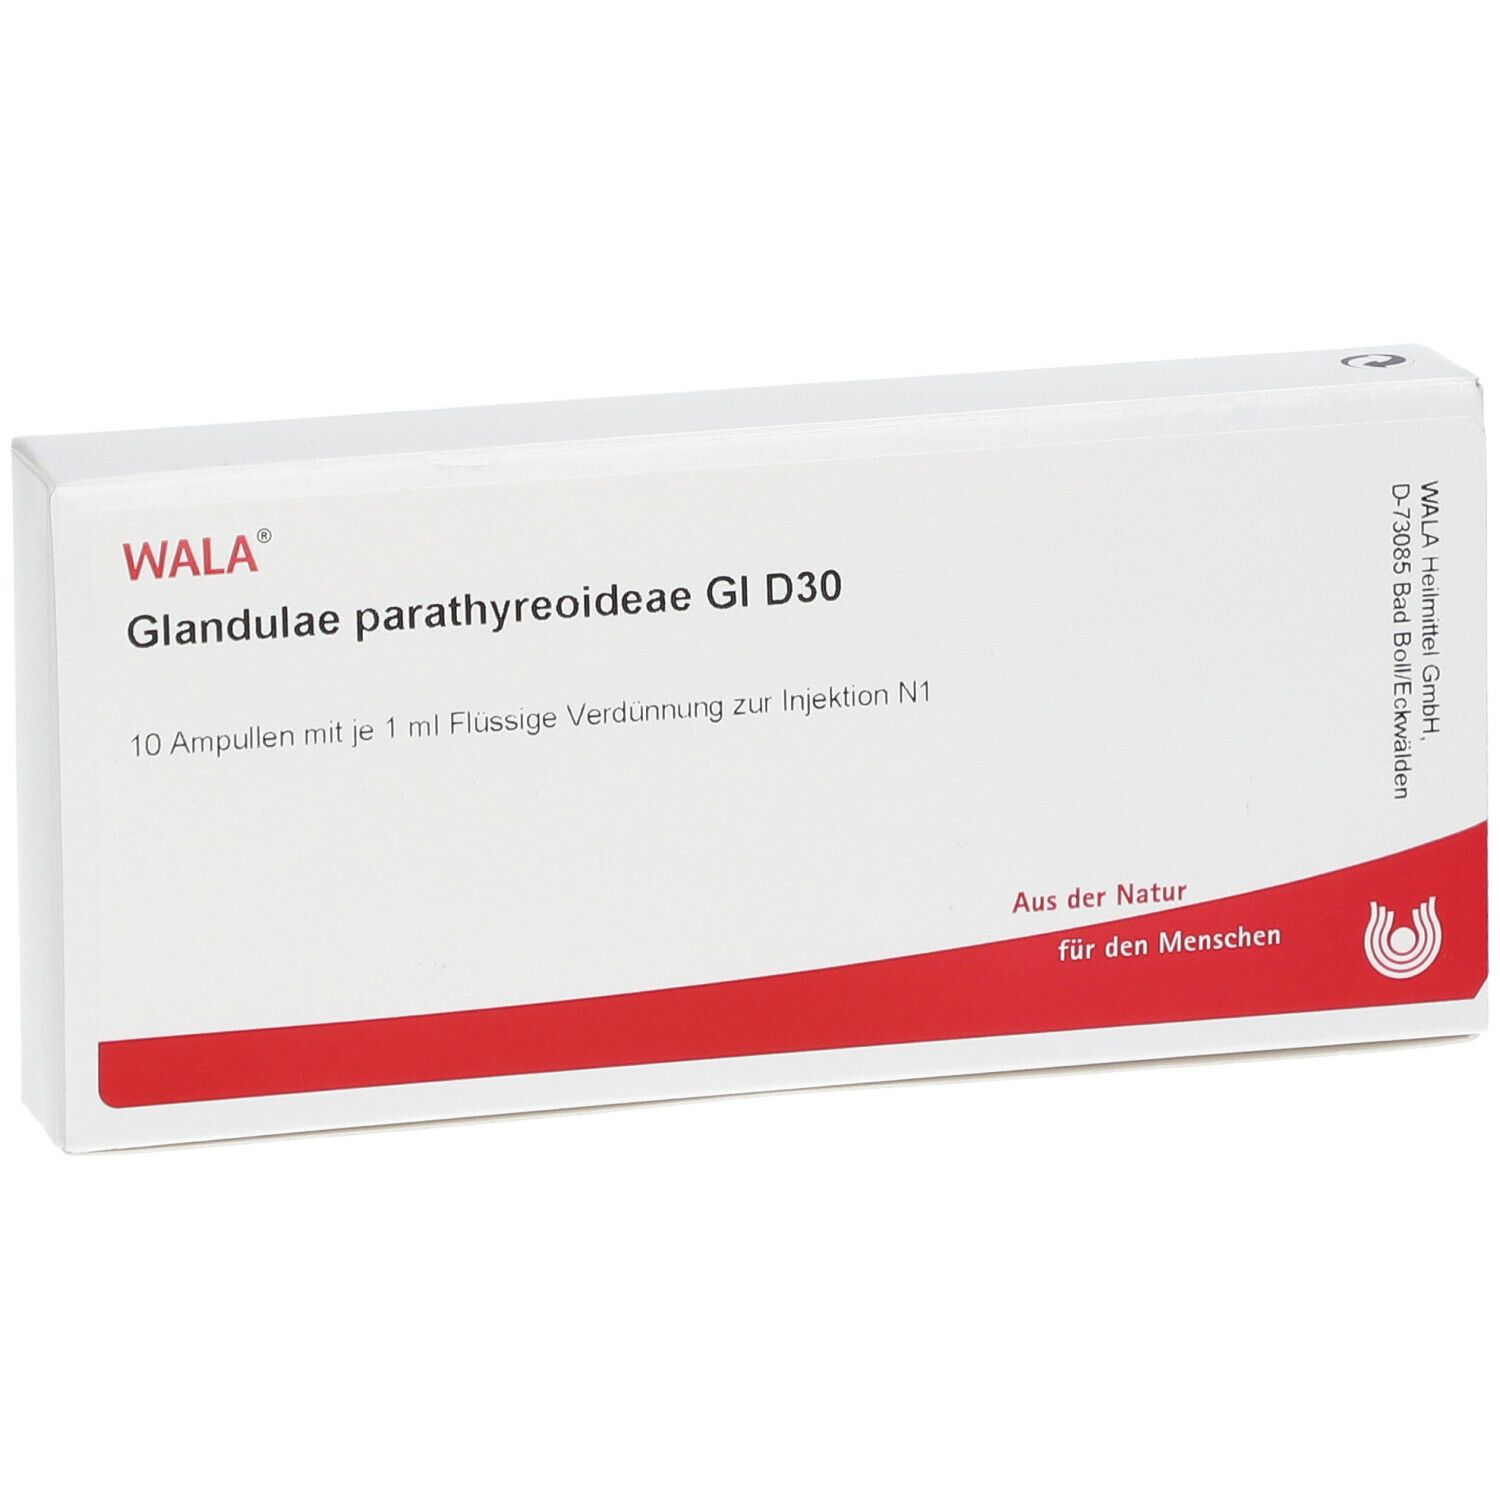 WALA® Glandulae parathyreoideae Gl D 30